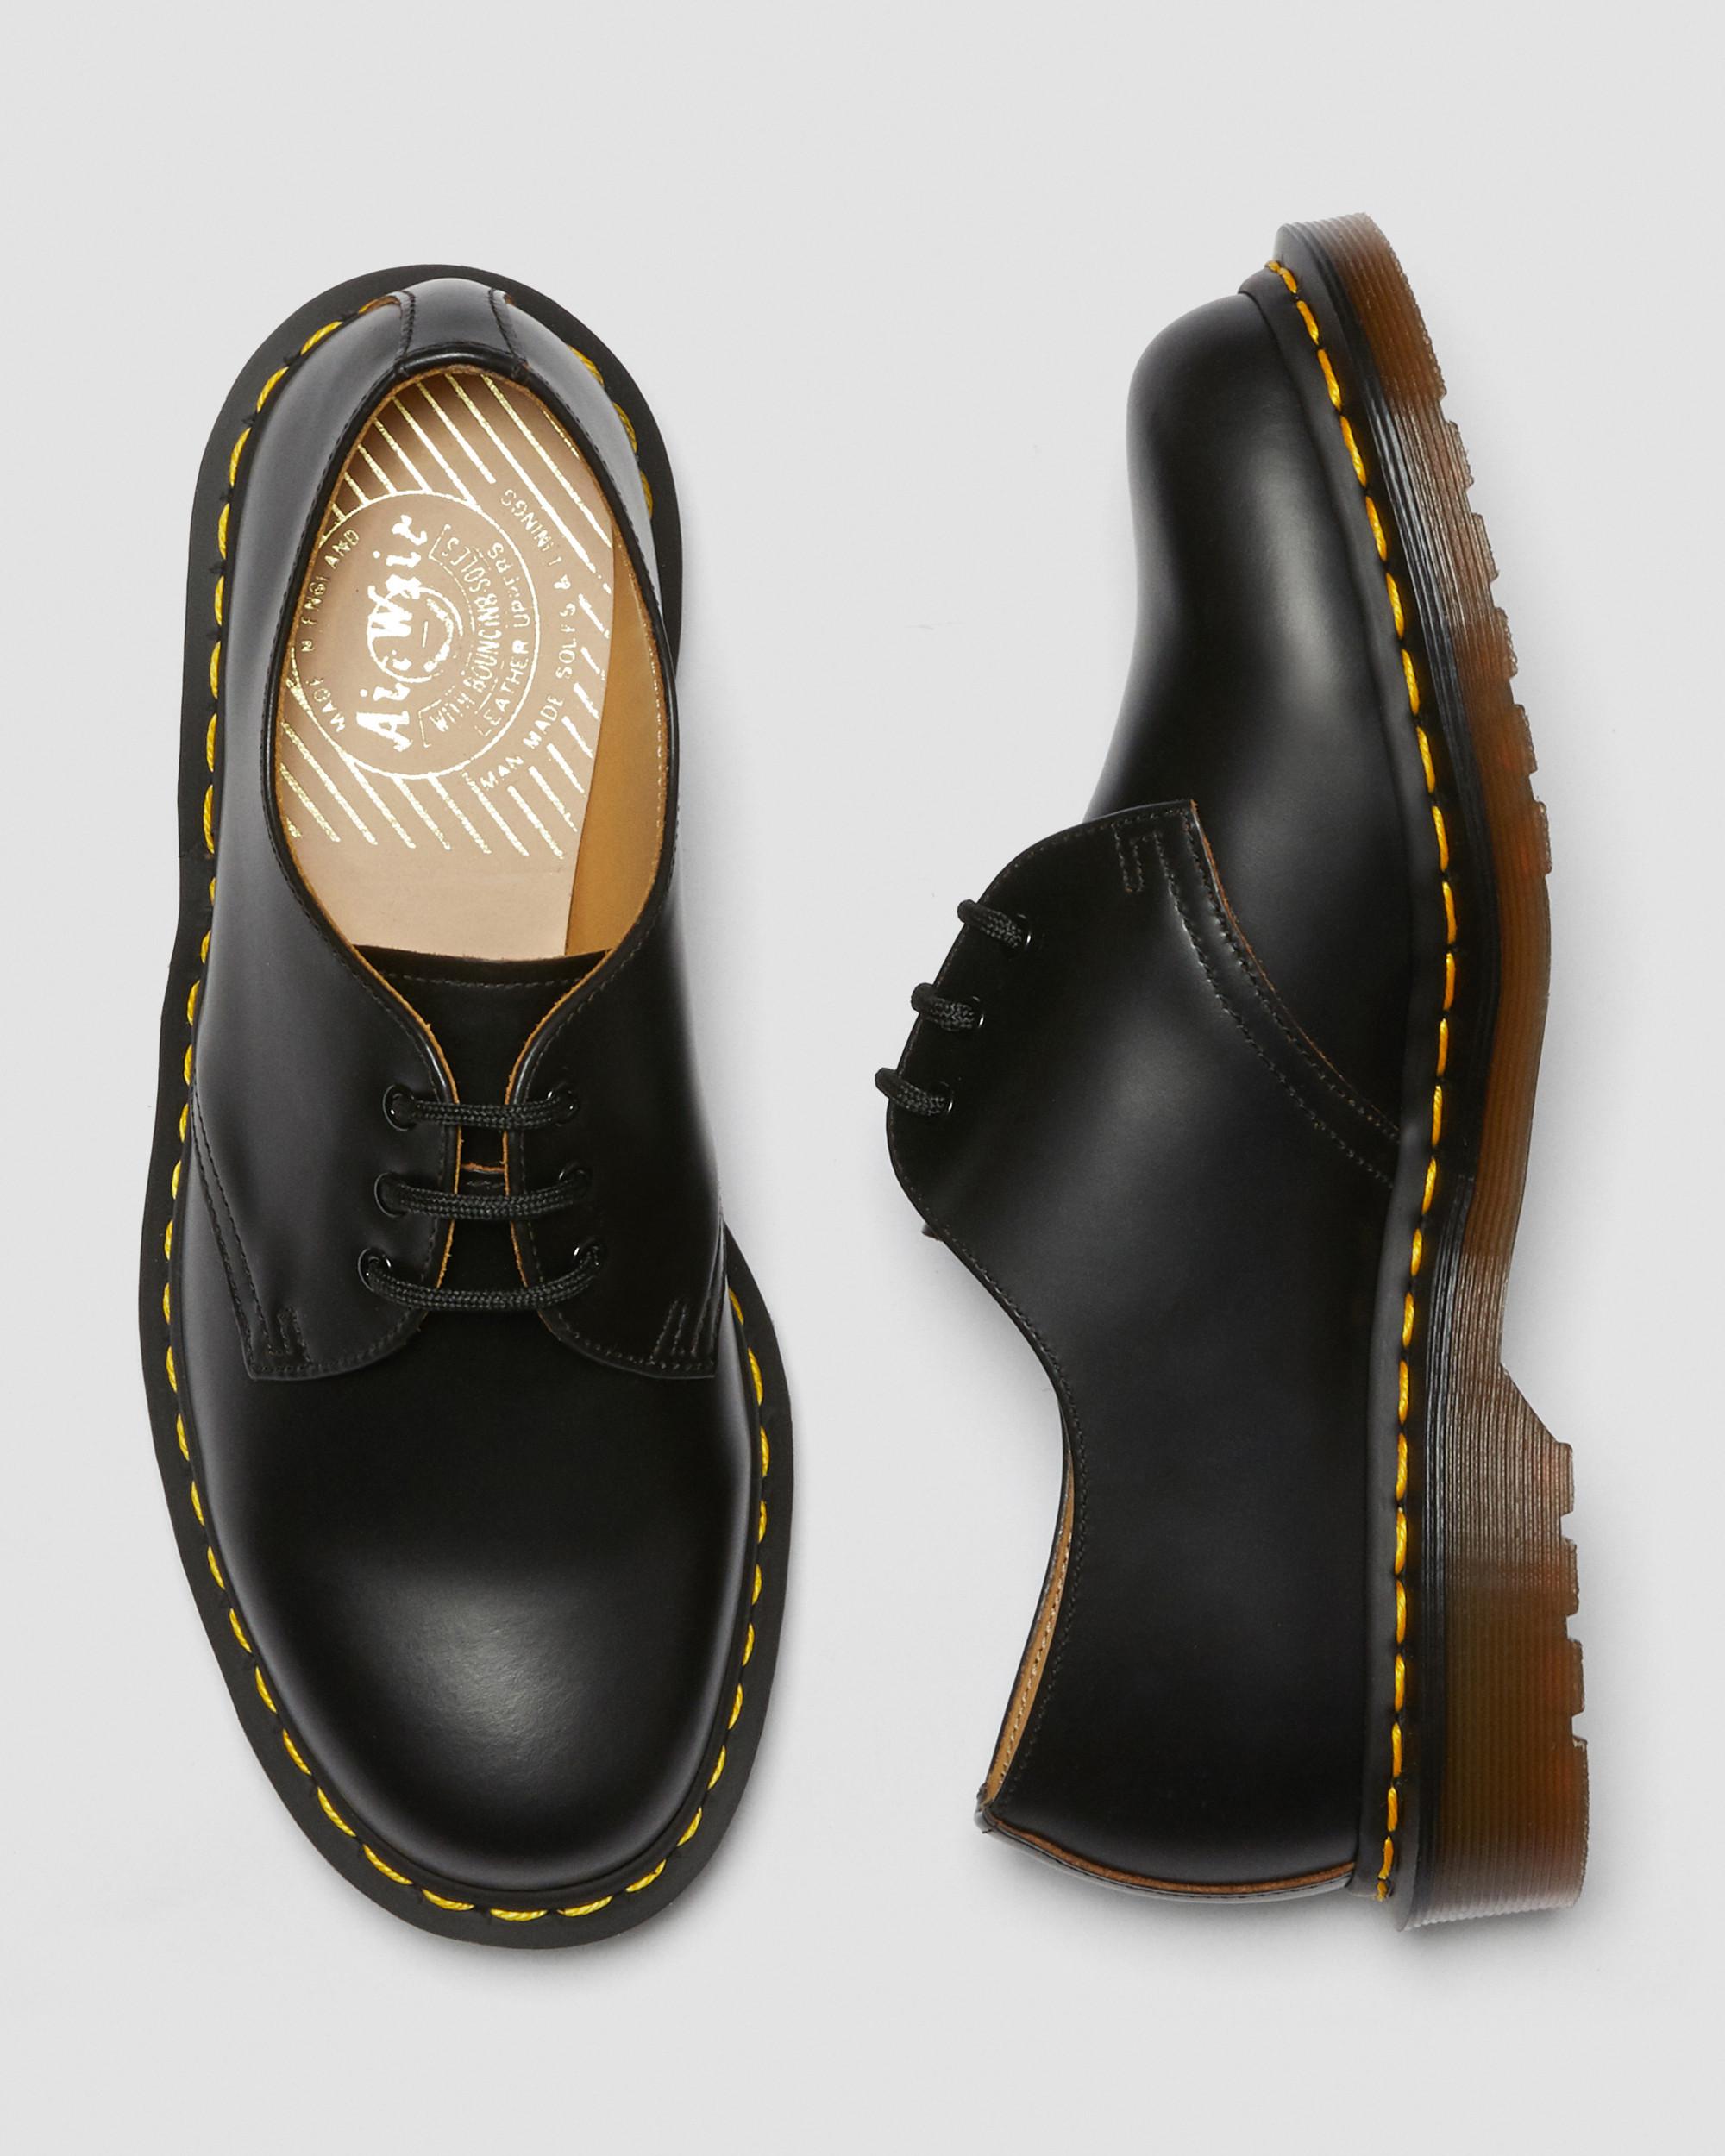 Vintage 1461 Quilon Leather Oxford Shoes in Black | Dr. Martens